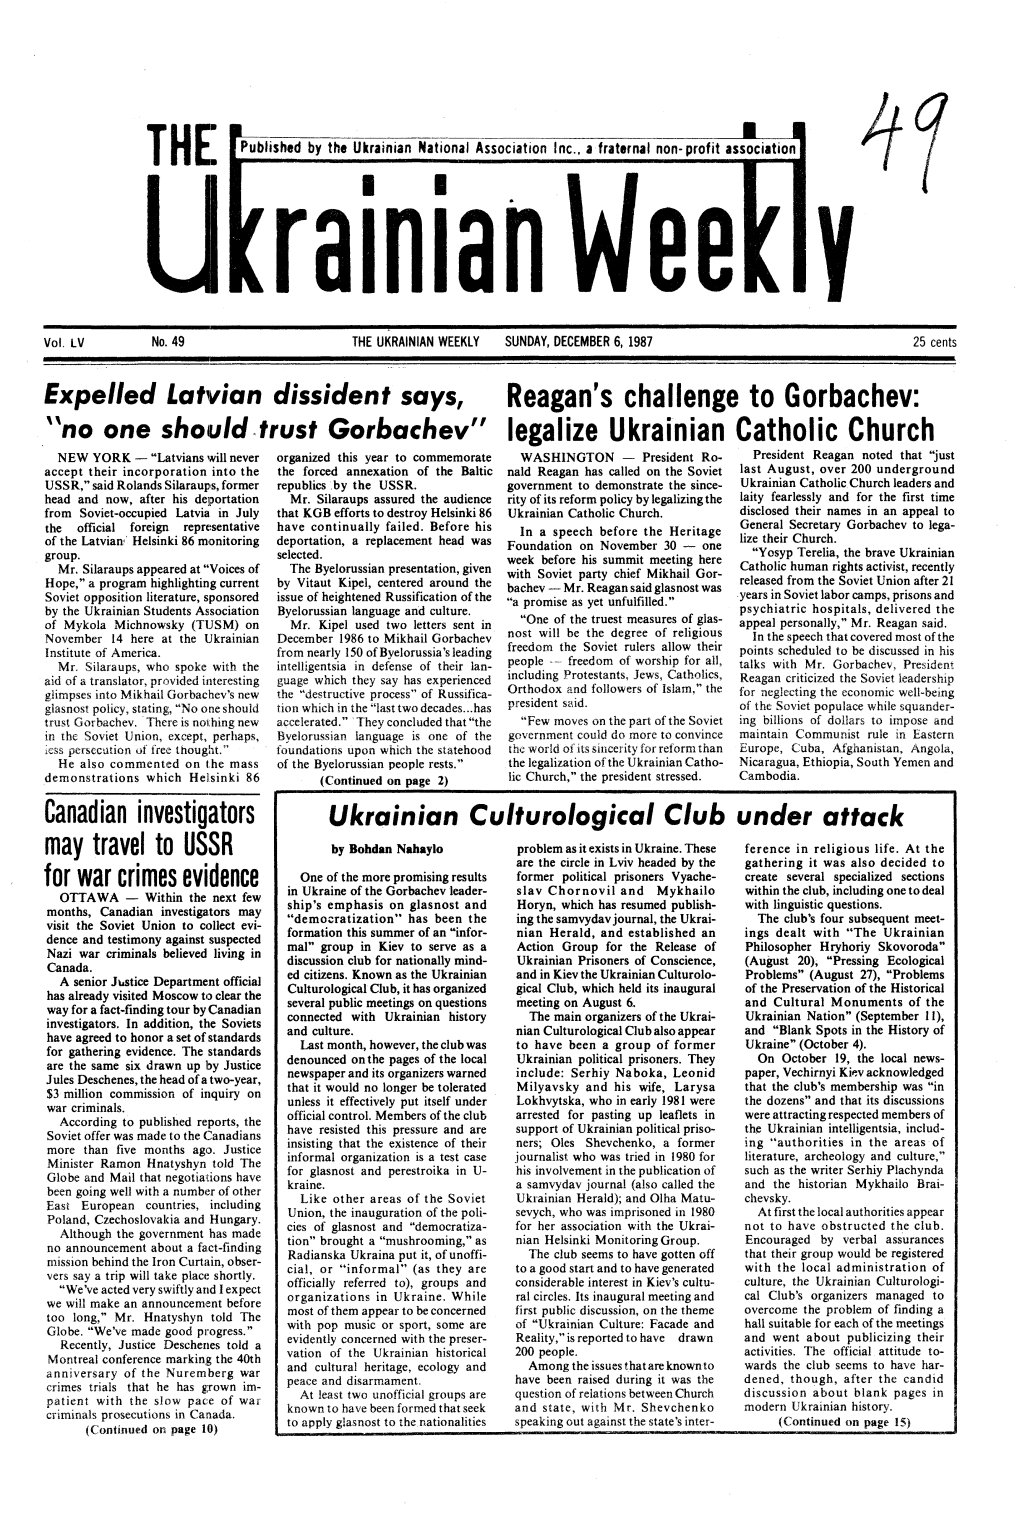 The Ukrainian Weekly 1987, No.49